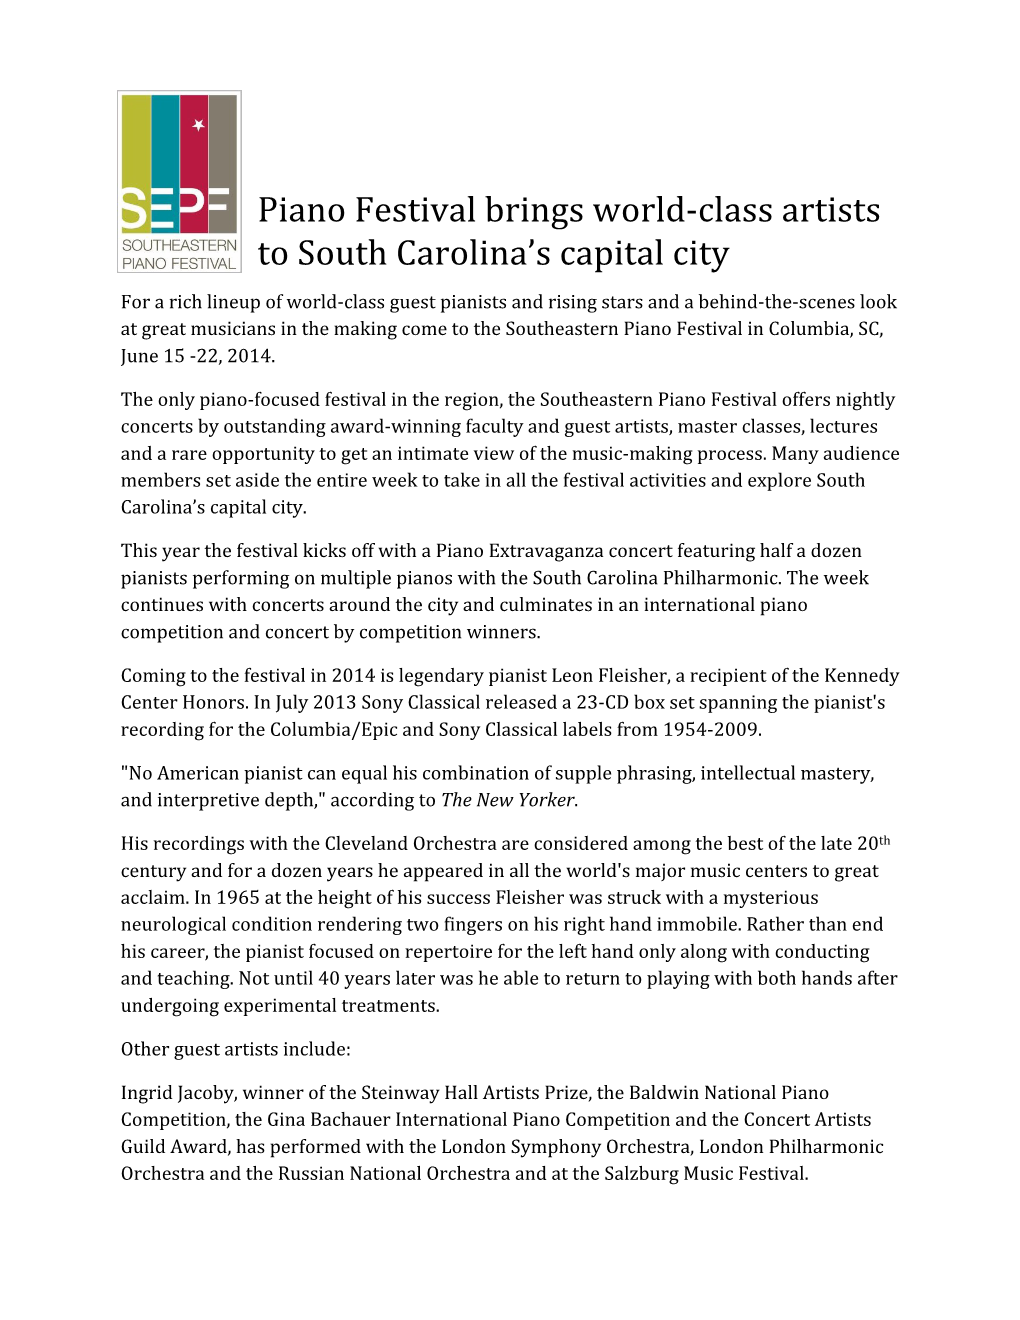 Piano Festival Brings World-‐Class Artists to South Carolina's Capital City